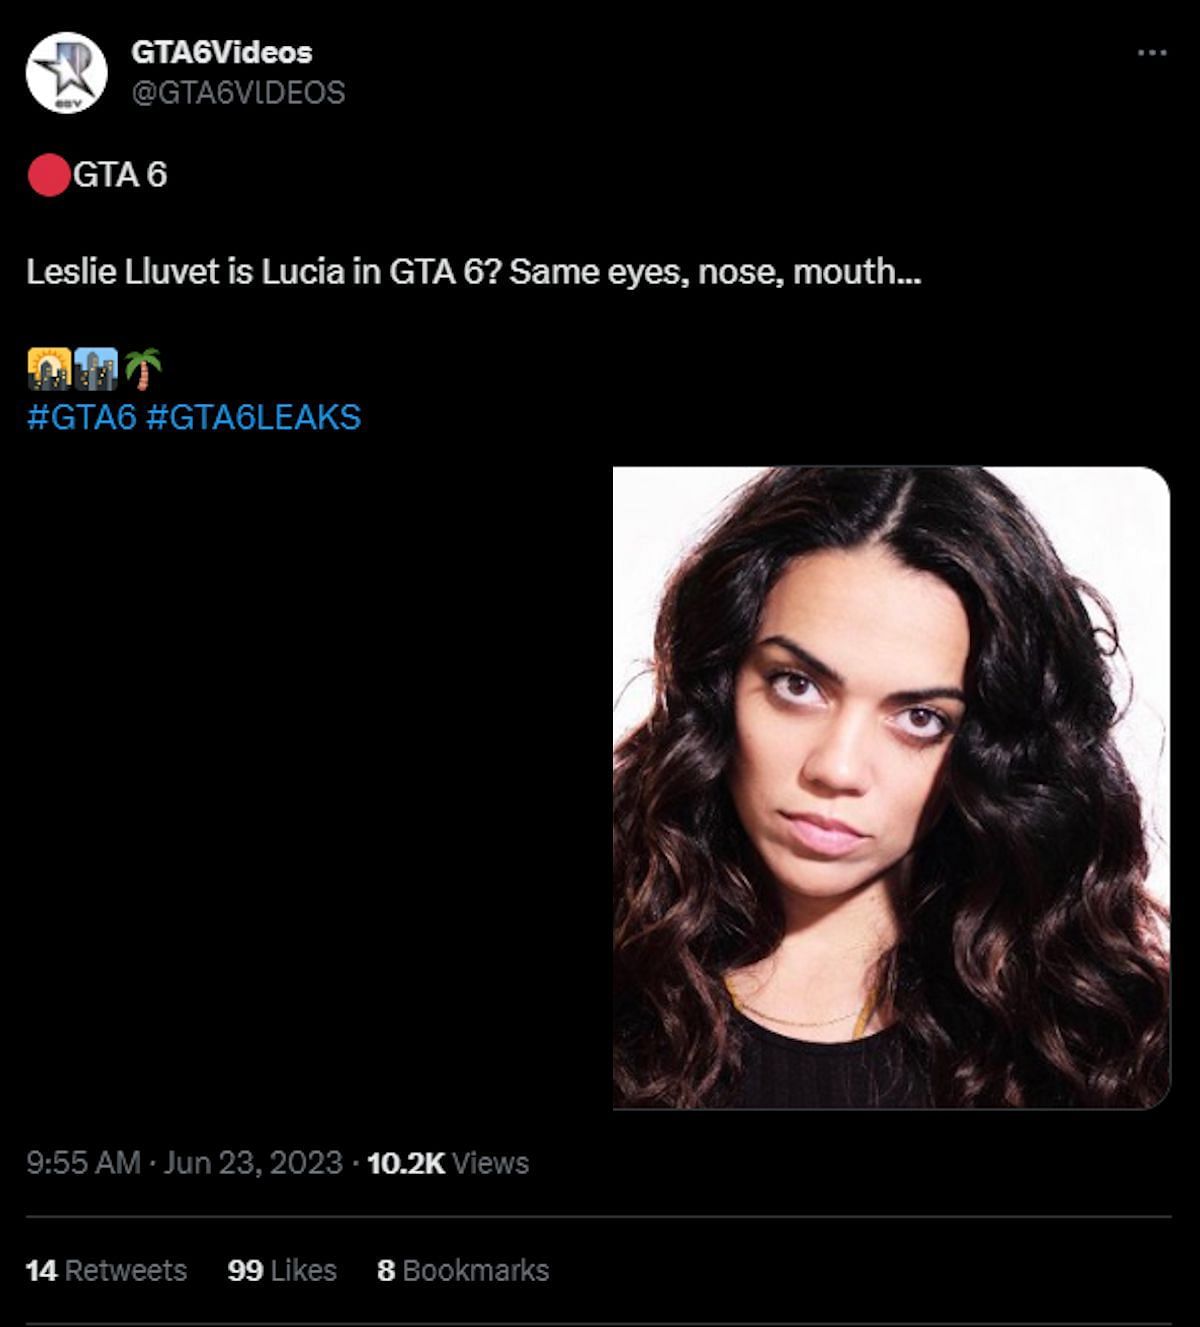 GTA 6 fans believe actress Leslie Lluvet to be Lucia as per leaks